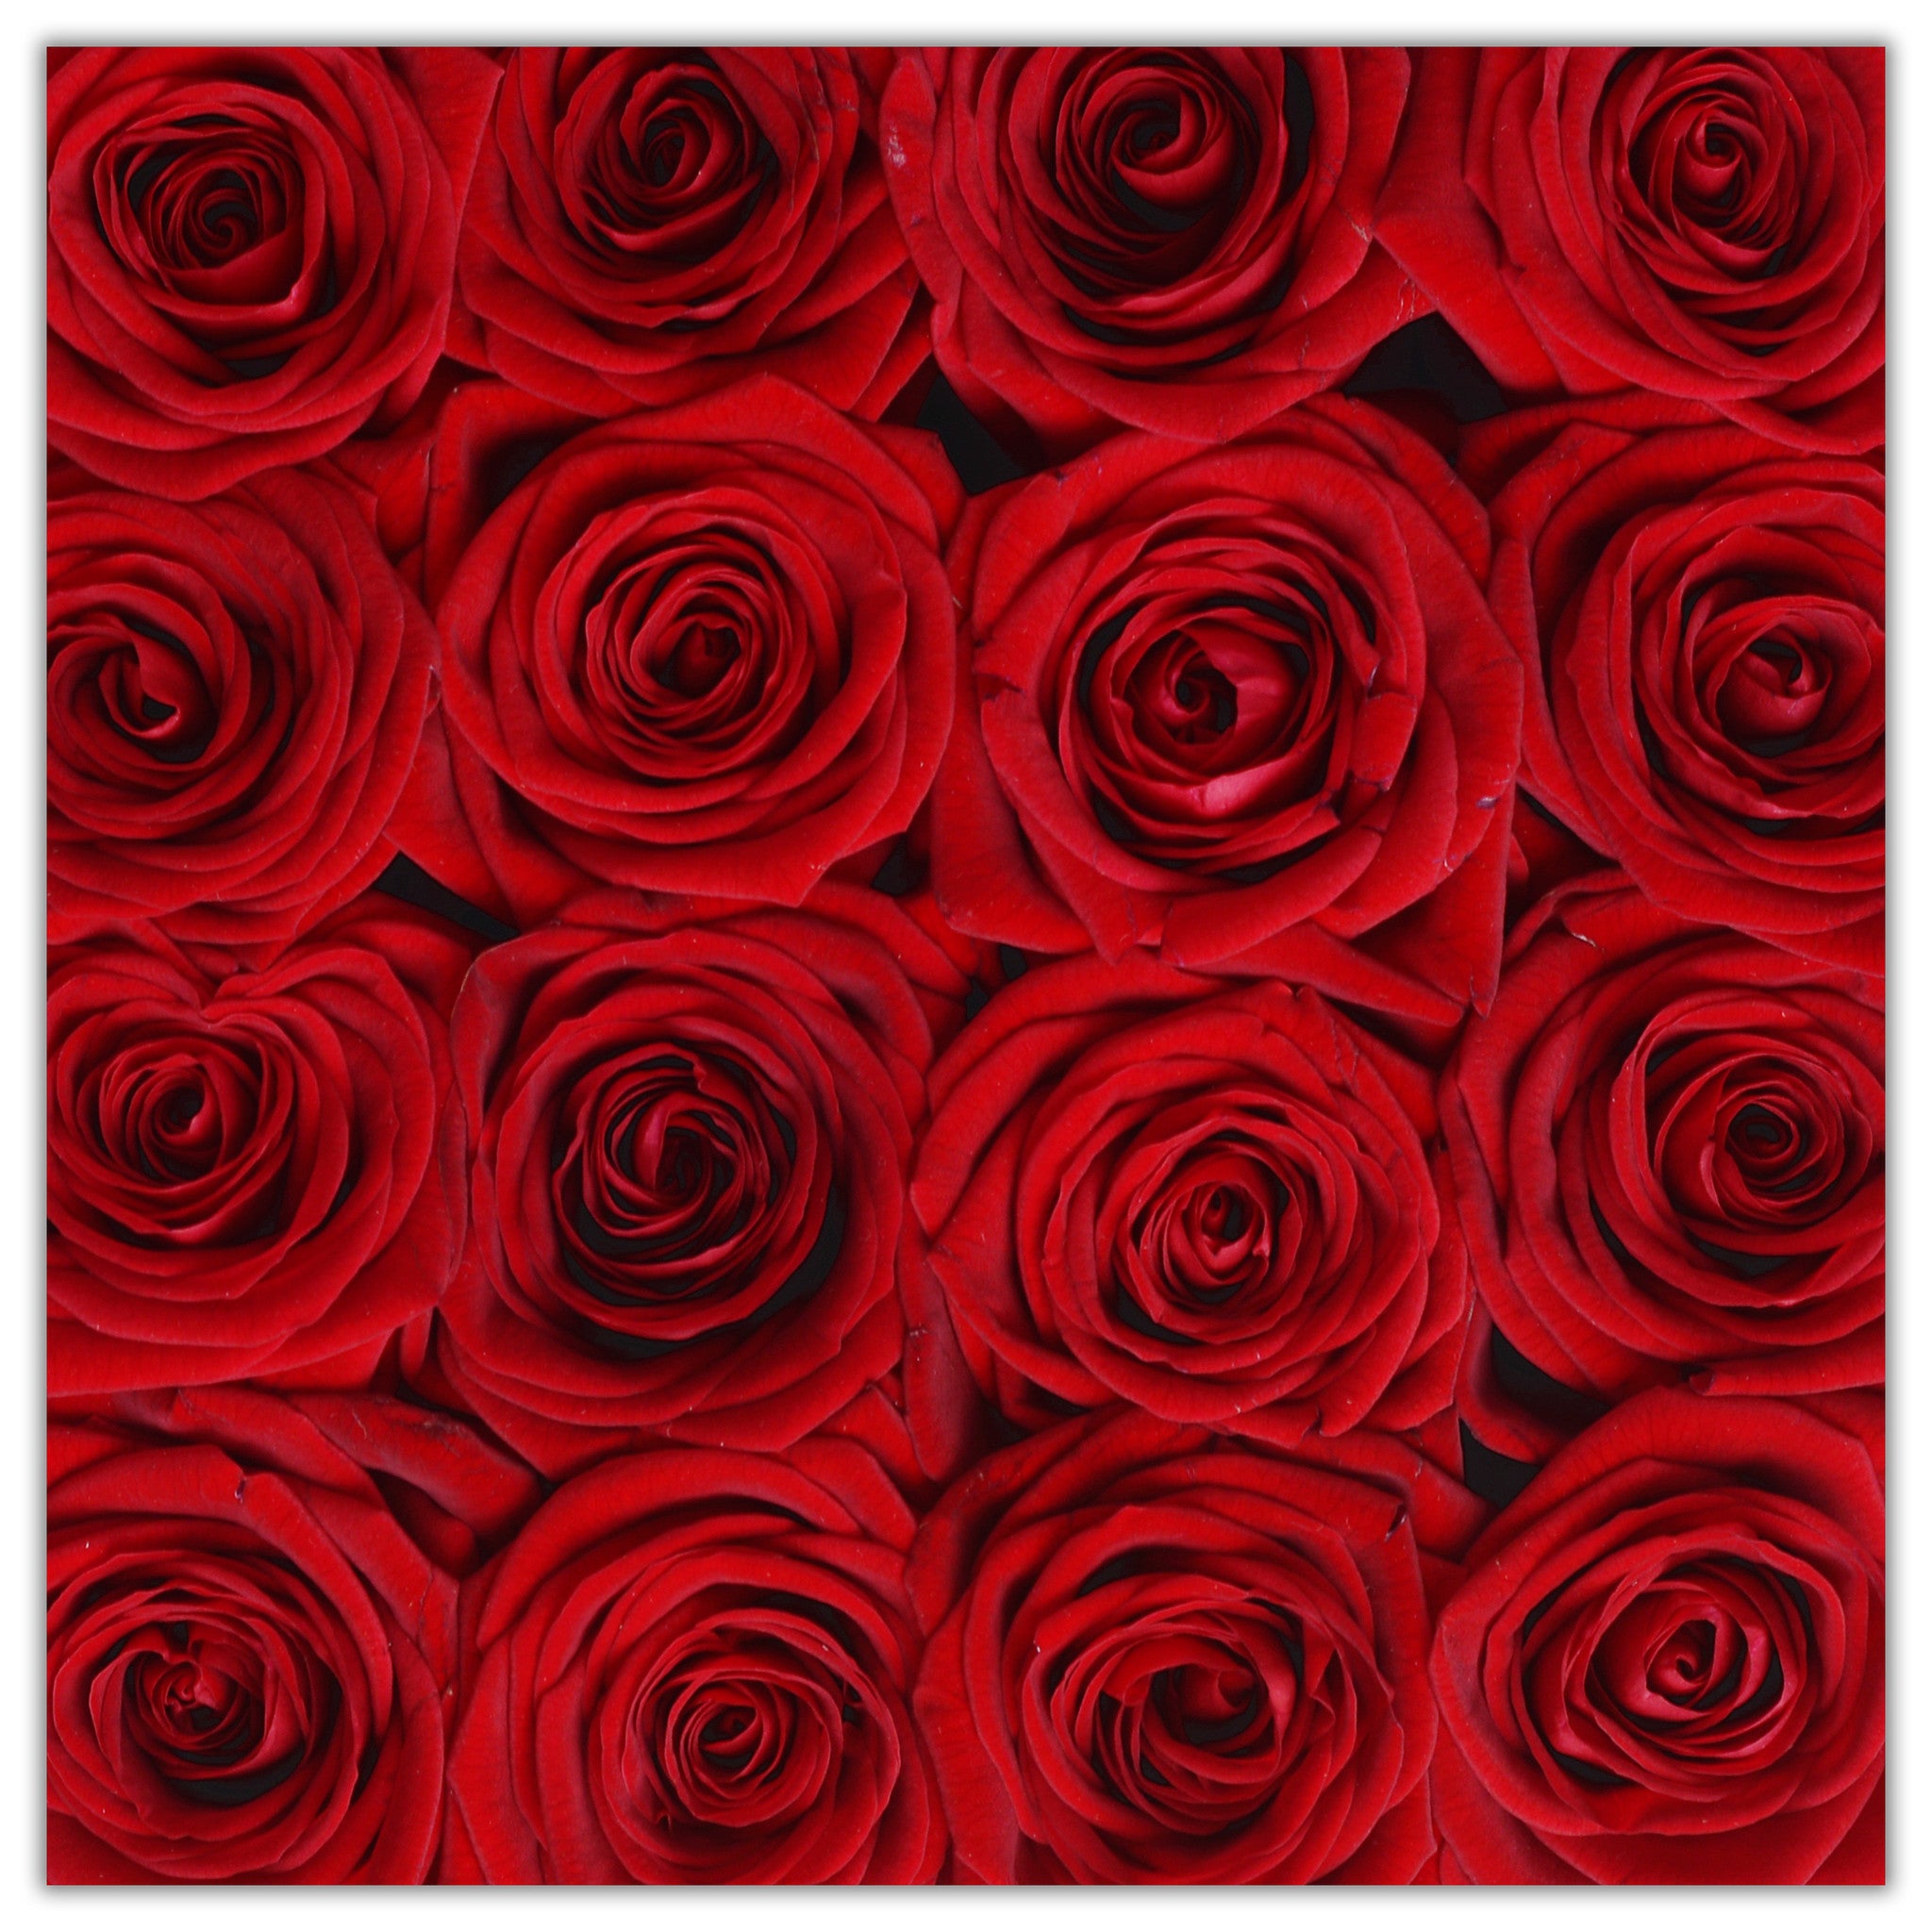 Cube - Red Roses - White Box - The Million Roses Budapest